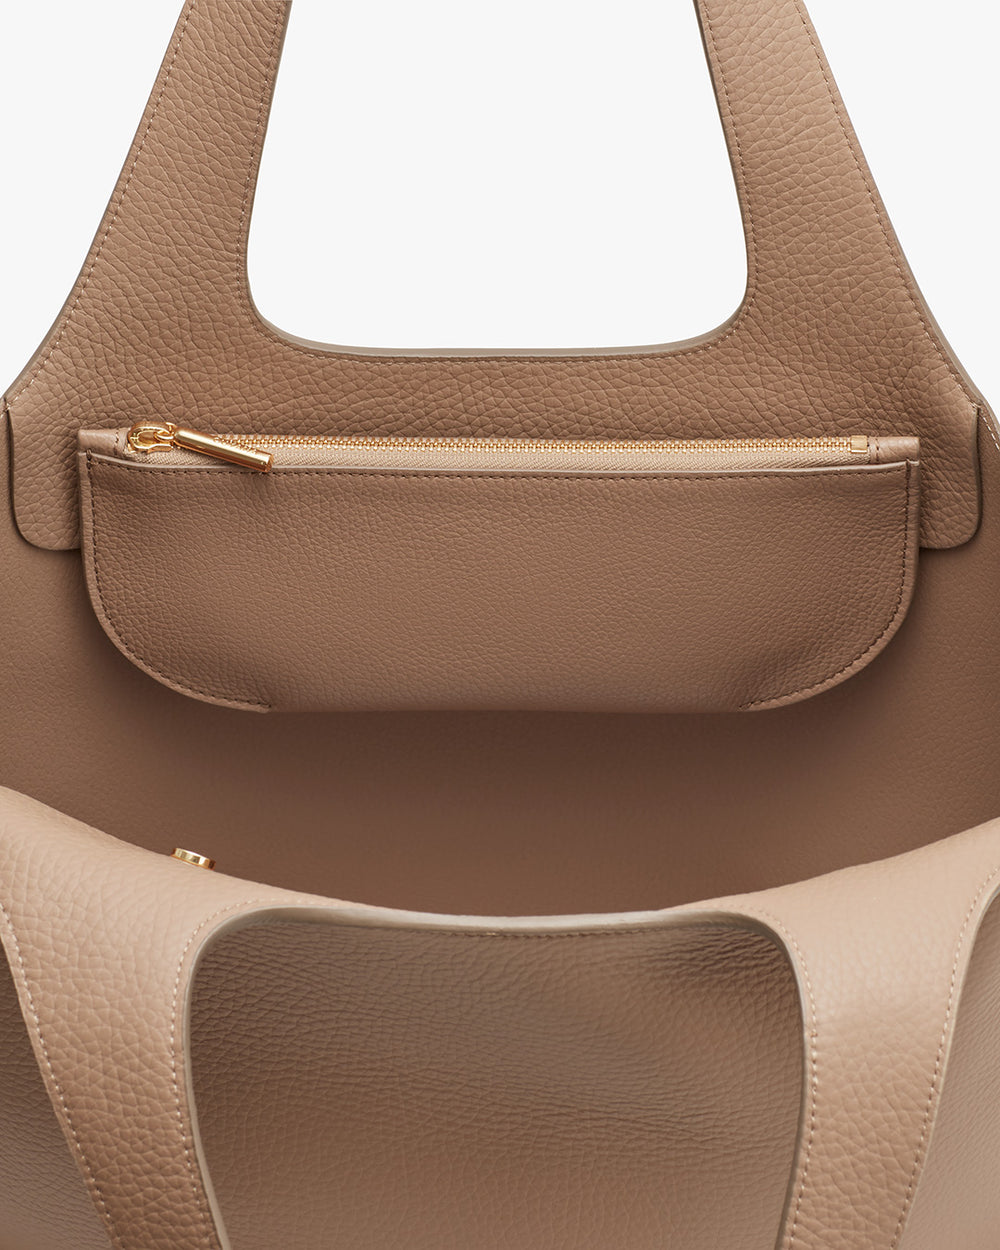 Close-up of a handbag with a zipper pocket.